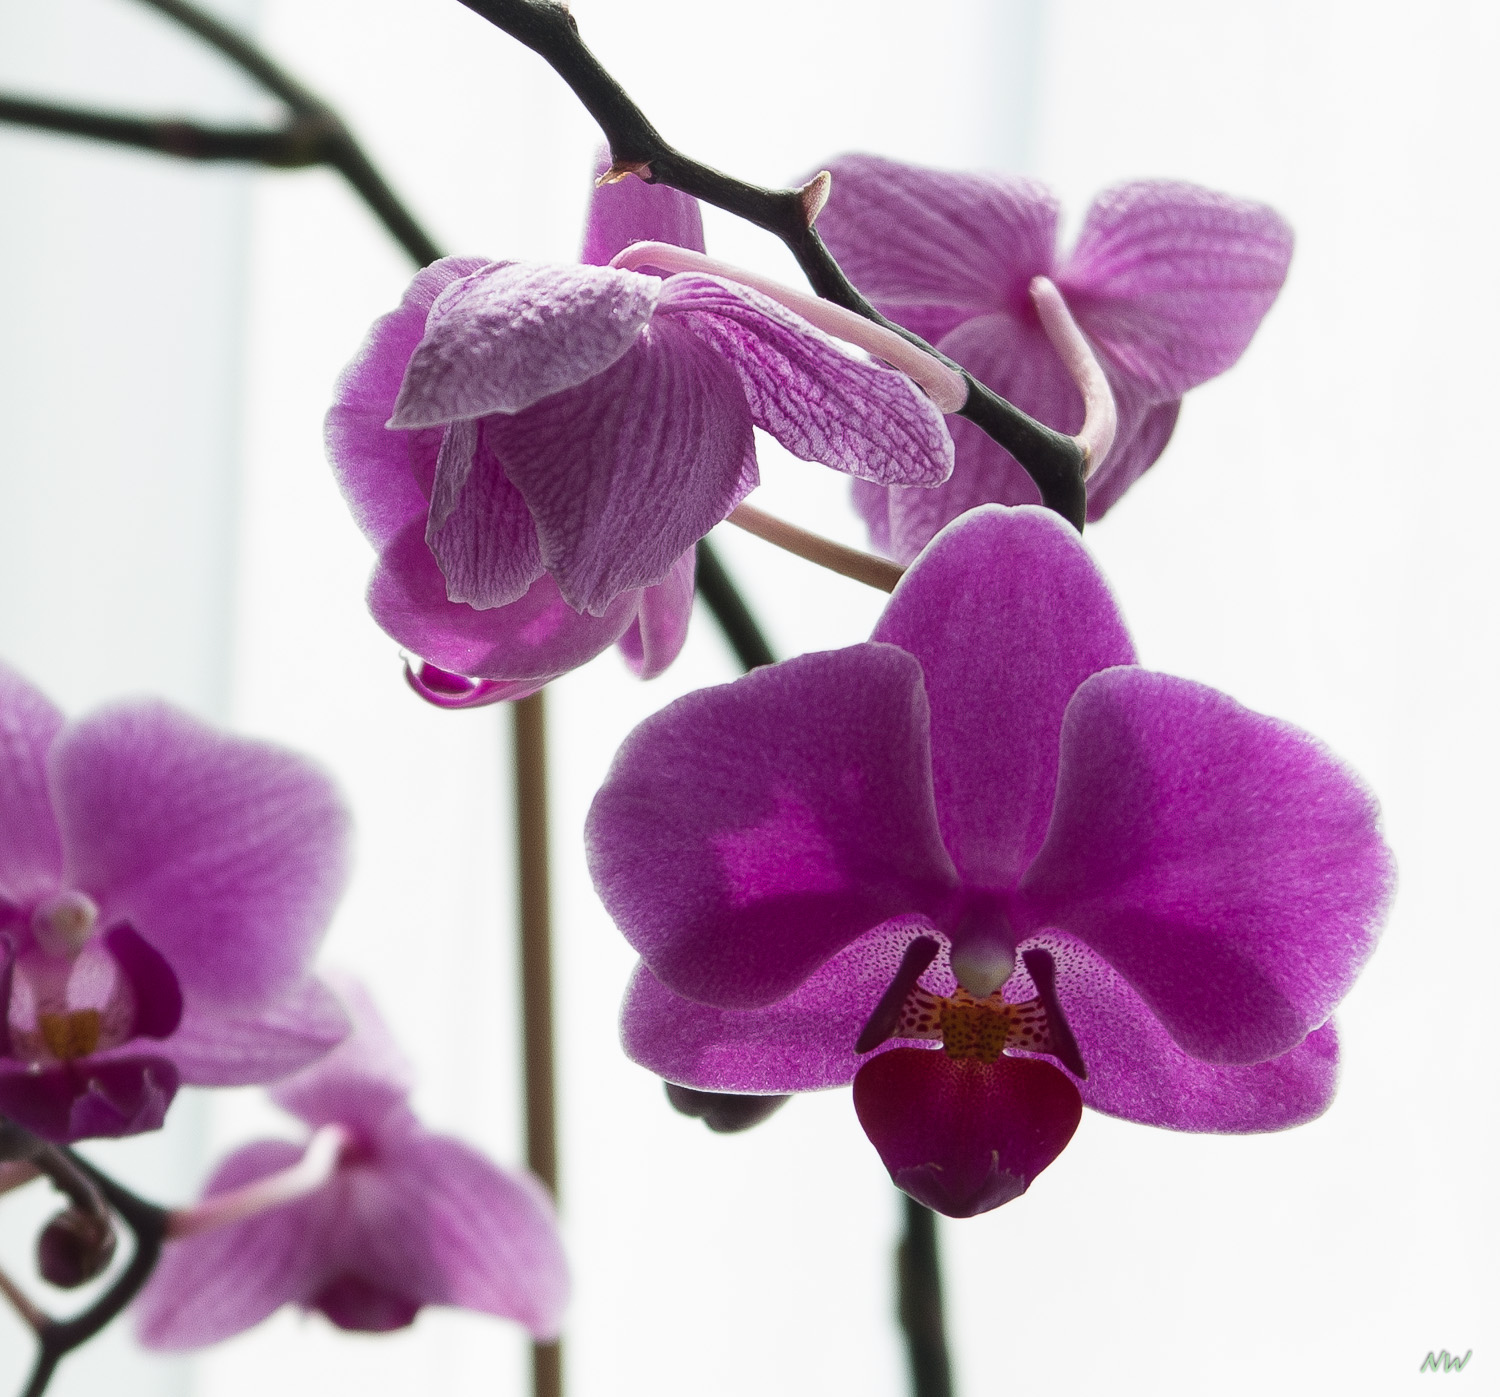 Orchidee - 2